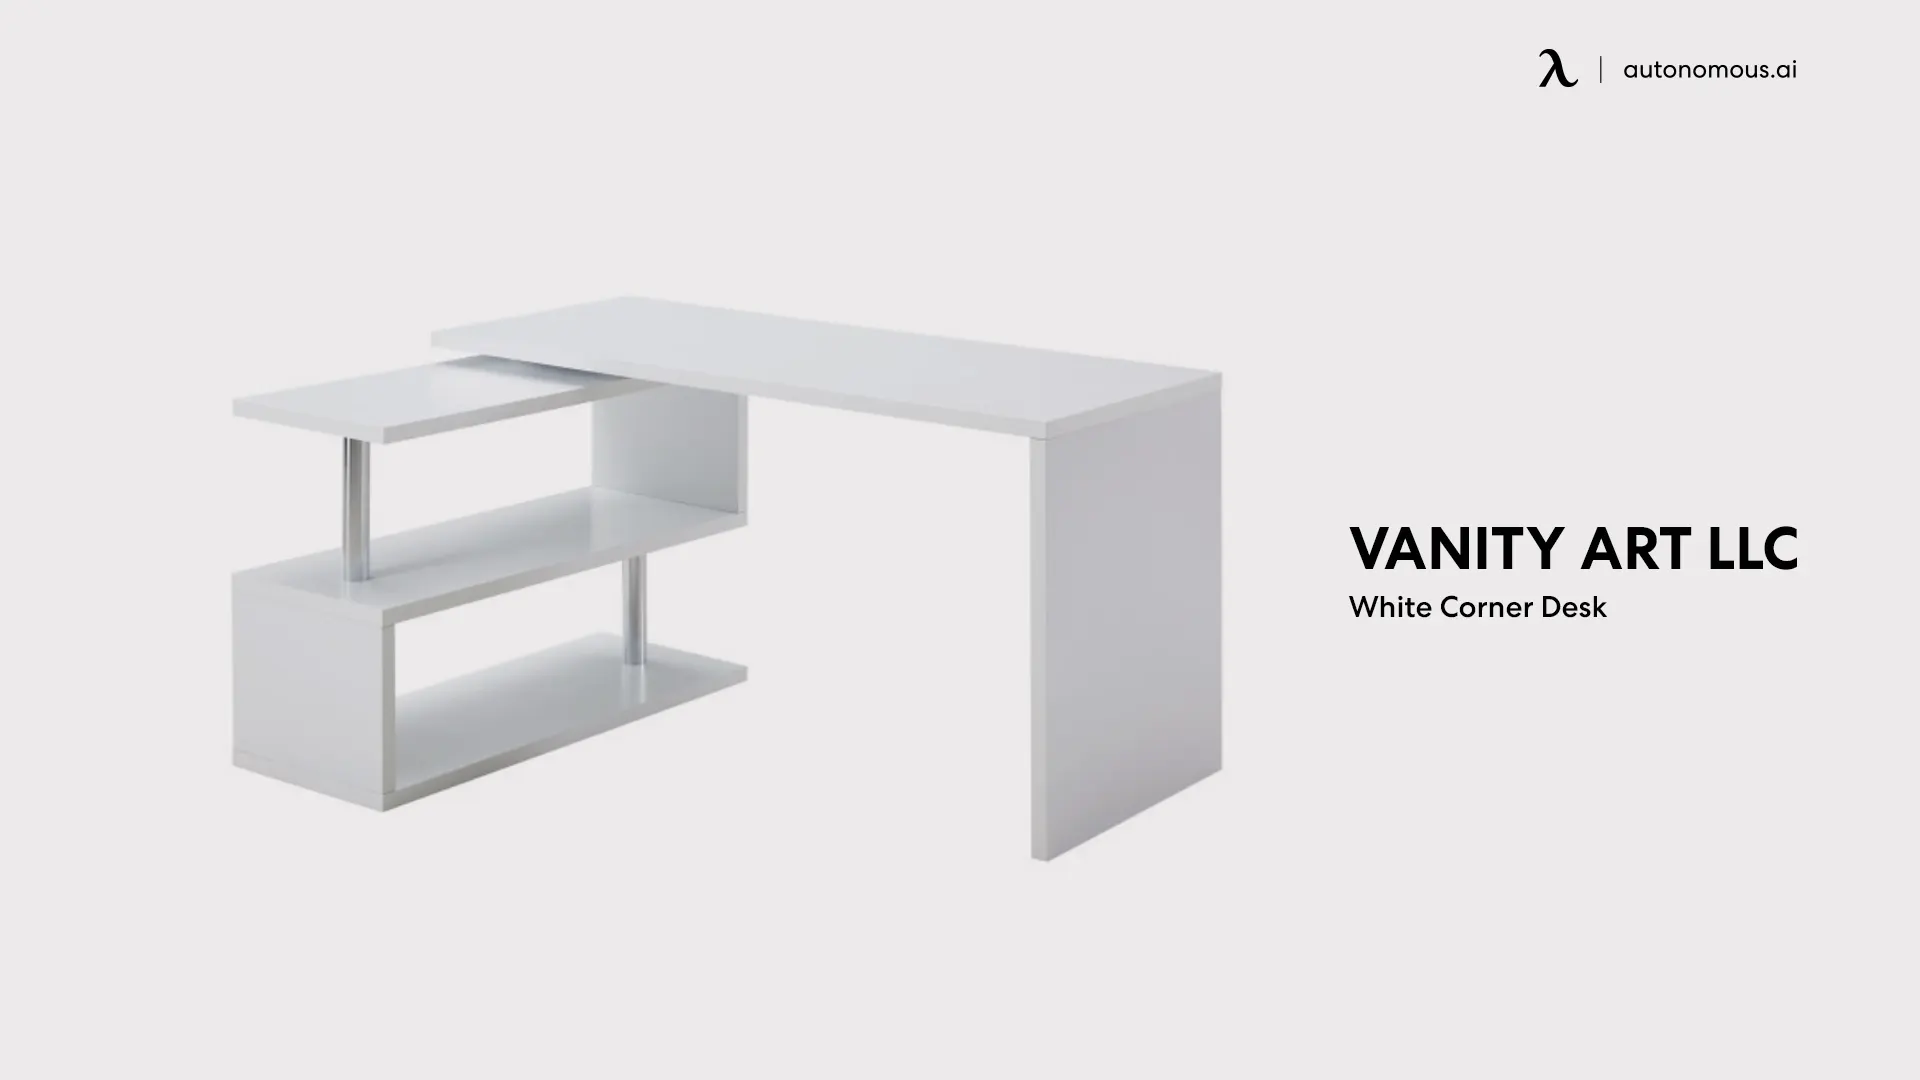 White Corner Desk by Vanity Art LLC